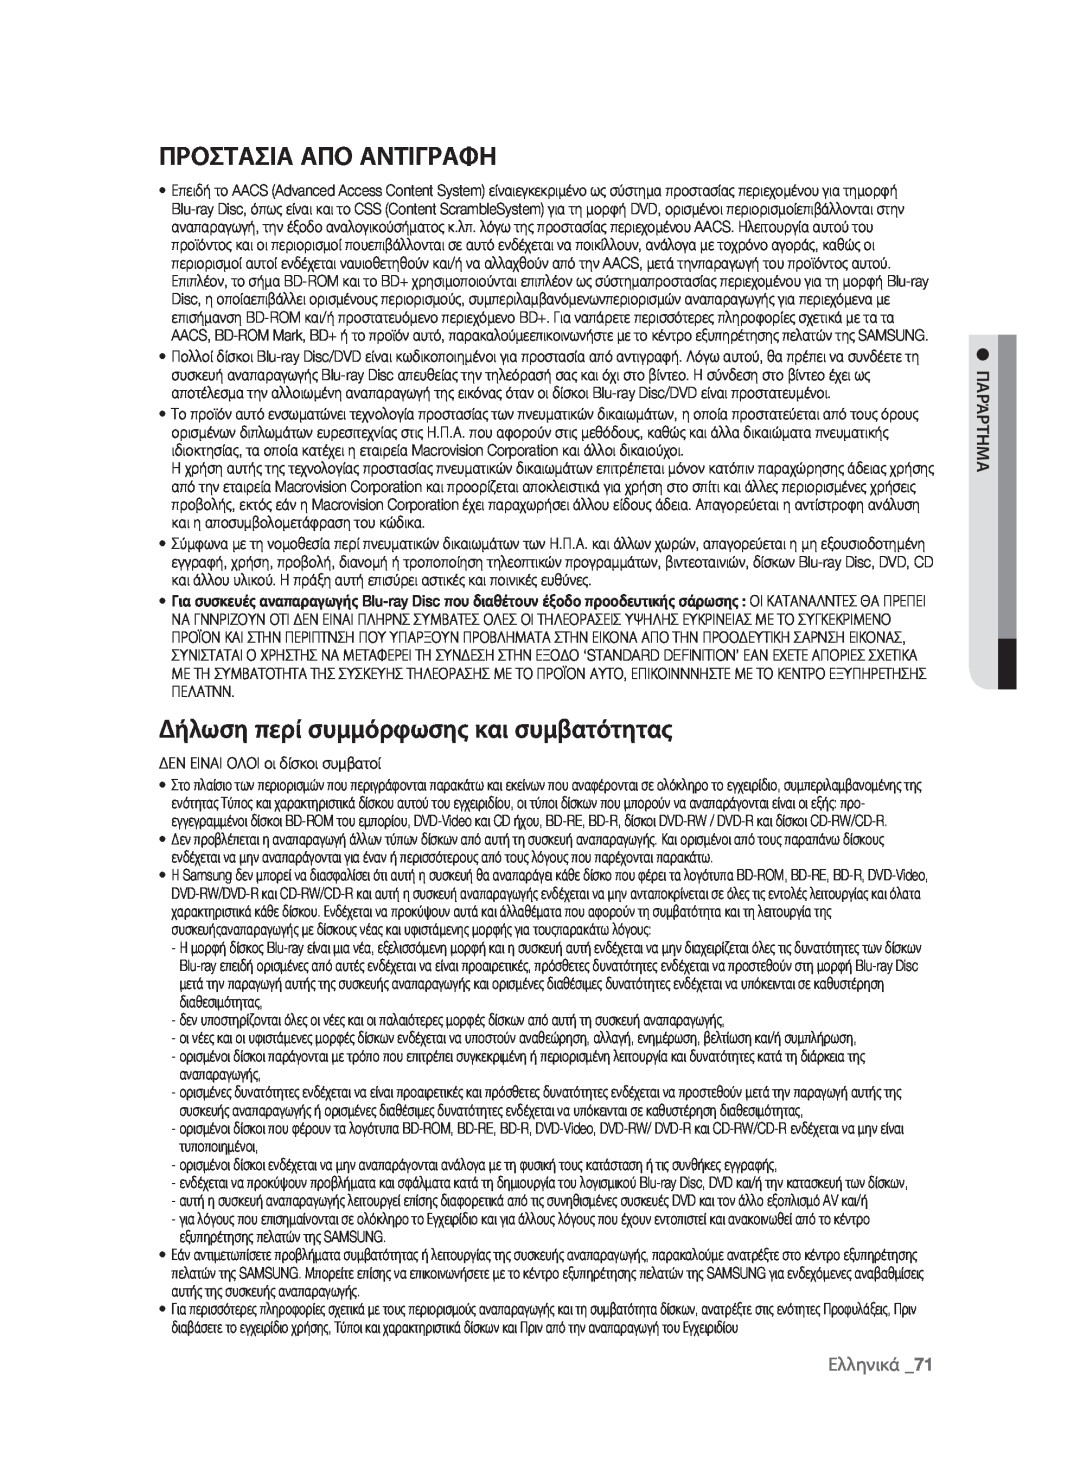 Samsung BD-P1580/EDC manual Προστασια Απο Αντιγραφη, Δήλωση περί συμμόρφωσης και συμβατότητας, Ελληνικά 